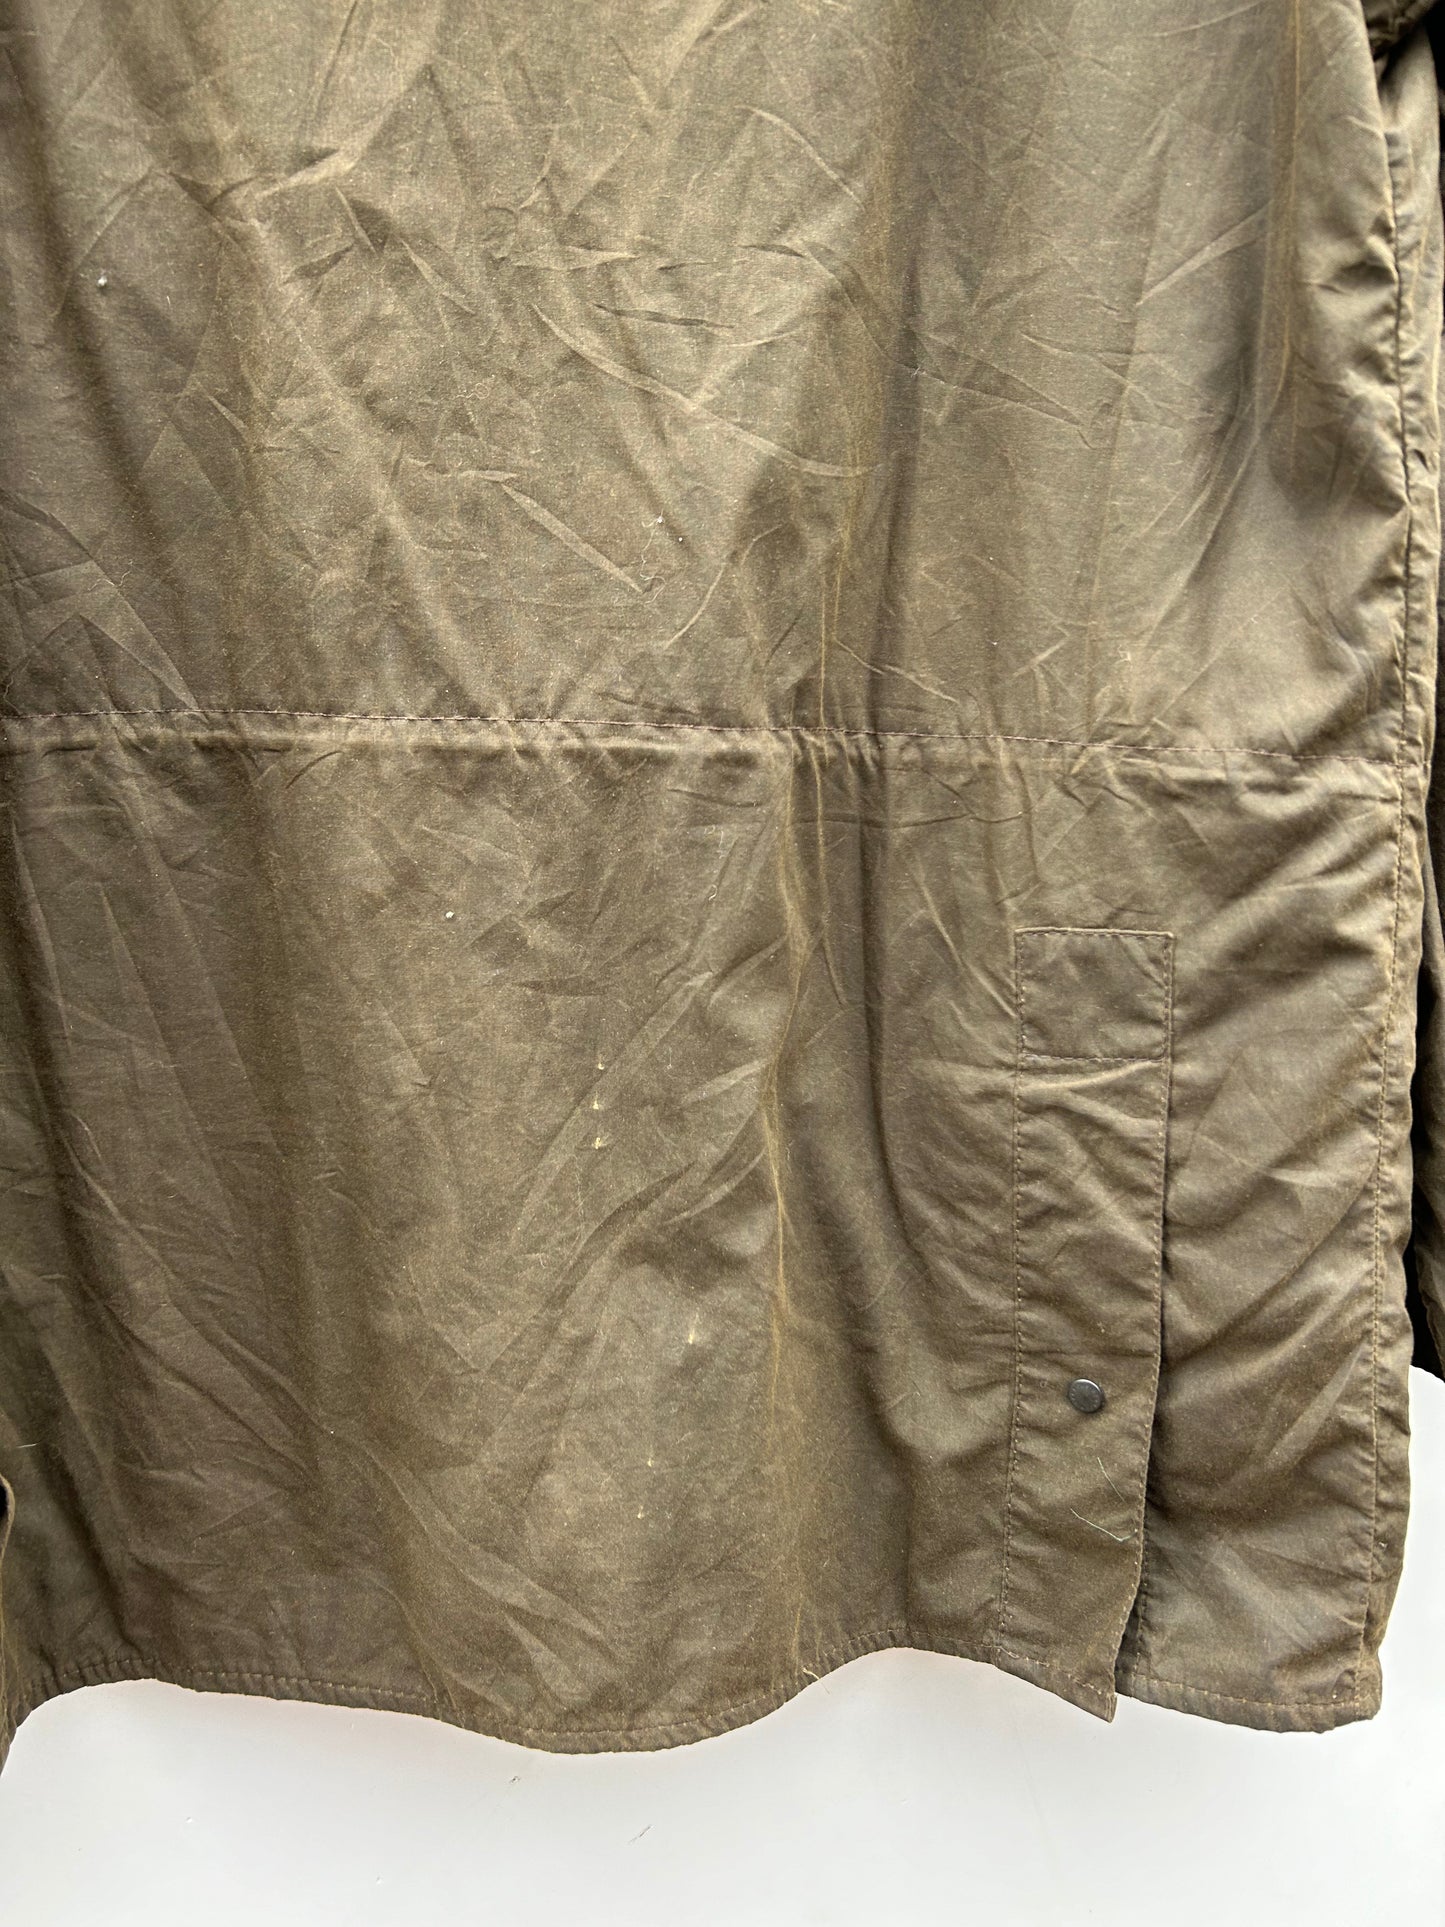 Giacca Barbour oliva vintage Durham C40/102 cm- Waxed Durham green jacket M